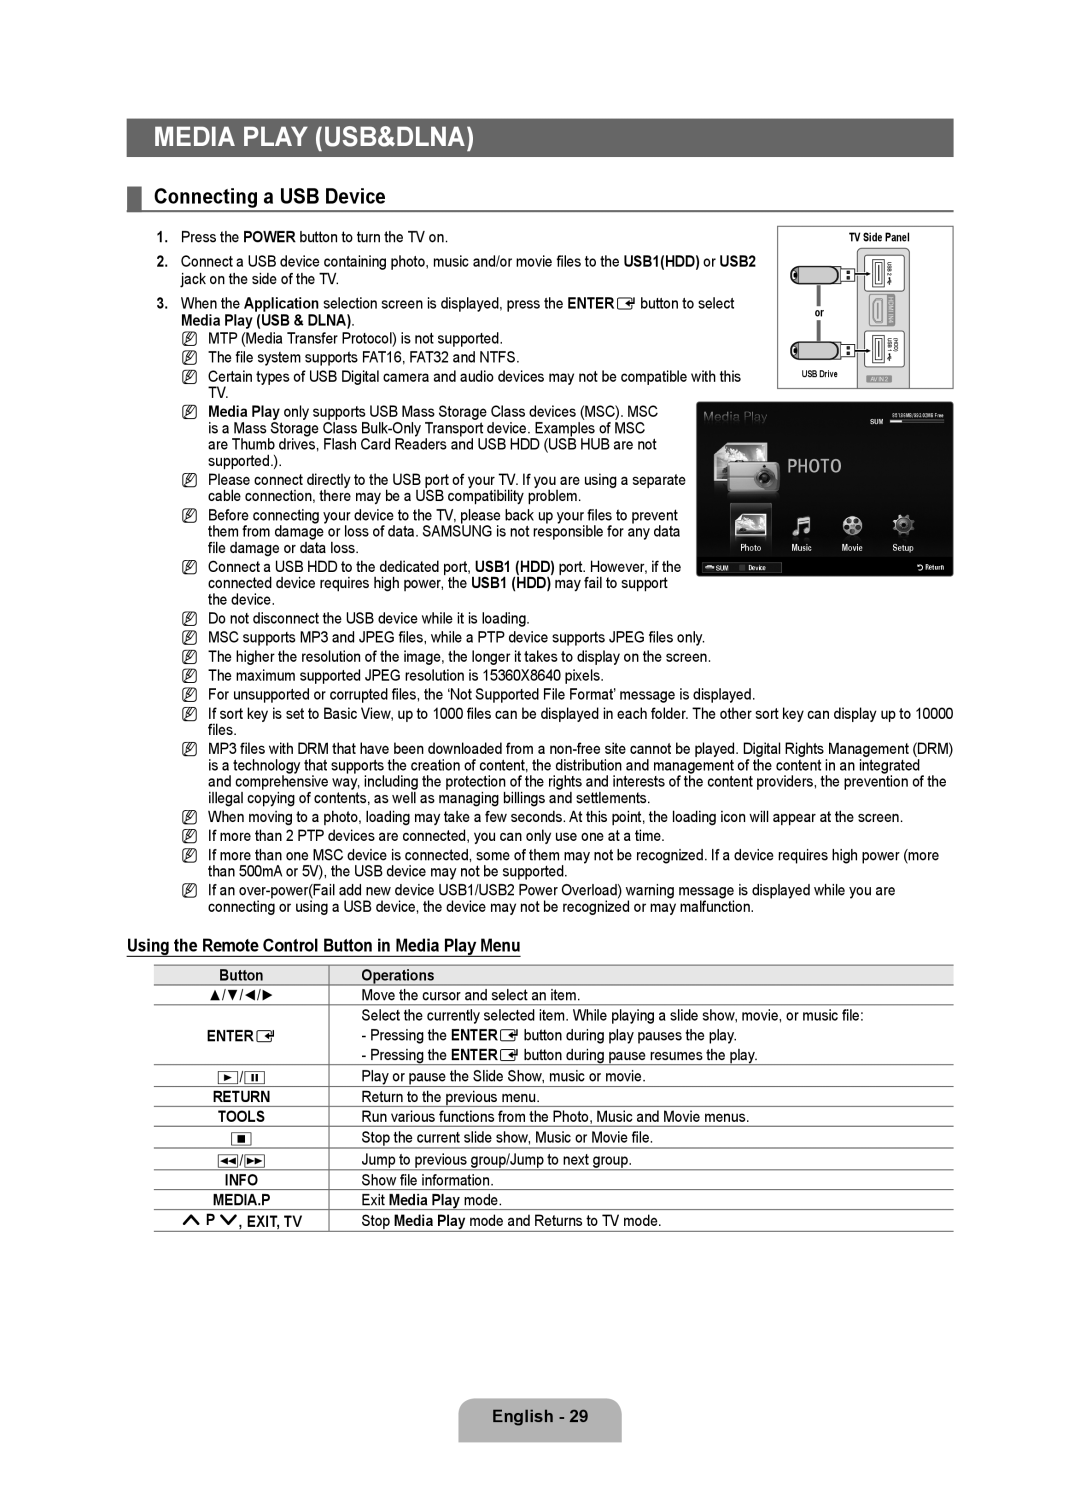 Samsung LA46B750U1R Media Play Usb&Dlna, Connecting a USB Device, Using the Remote Control Button in Media Play Menu, ∂ /∑ 